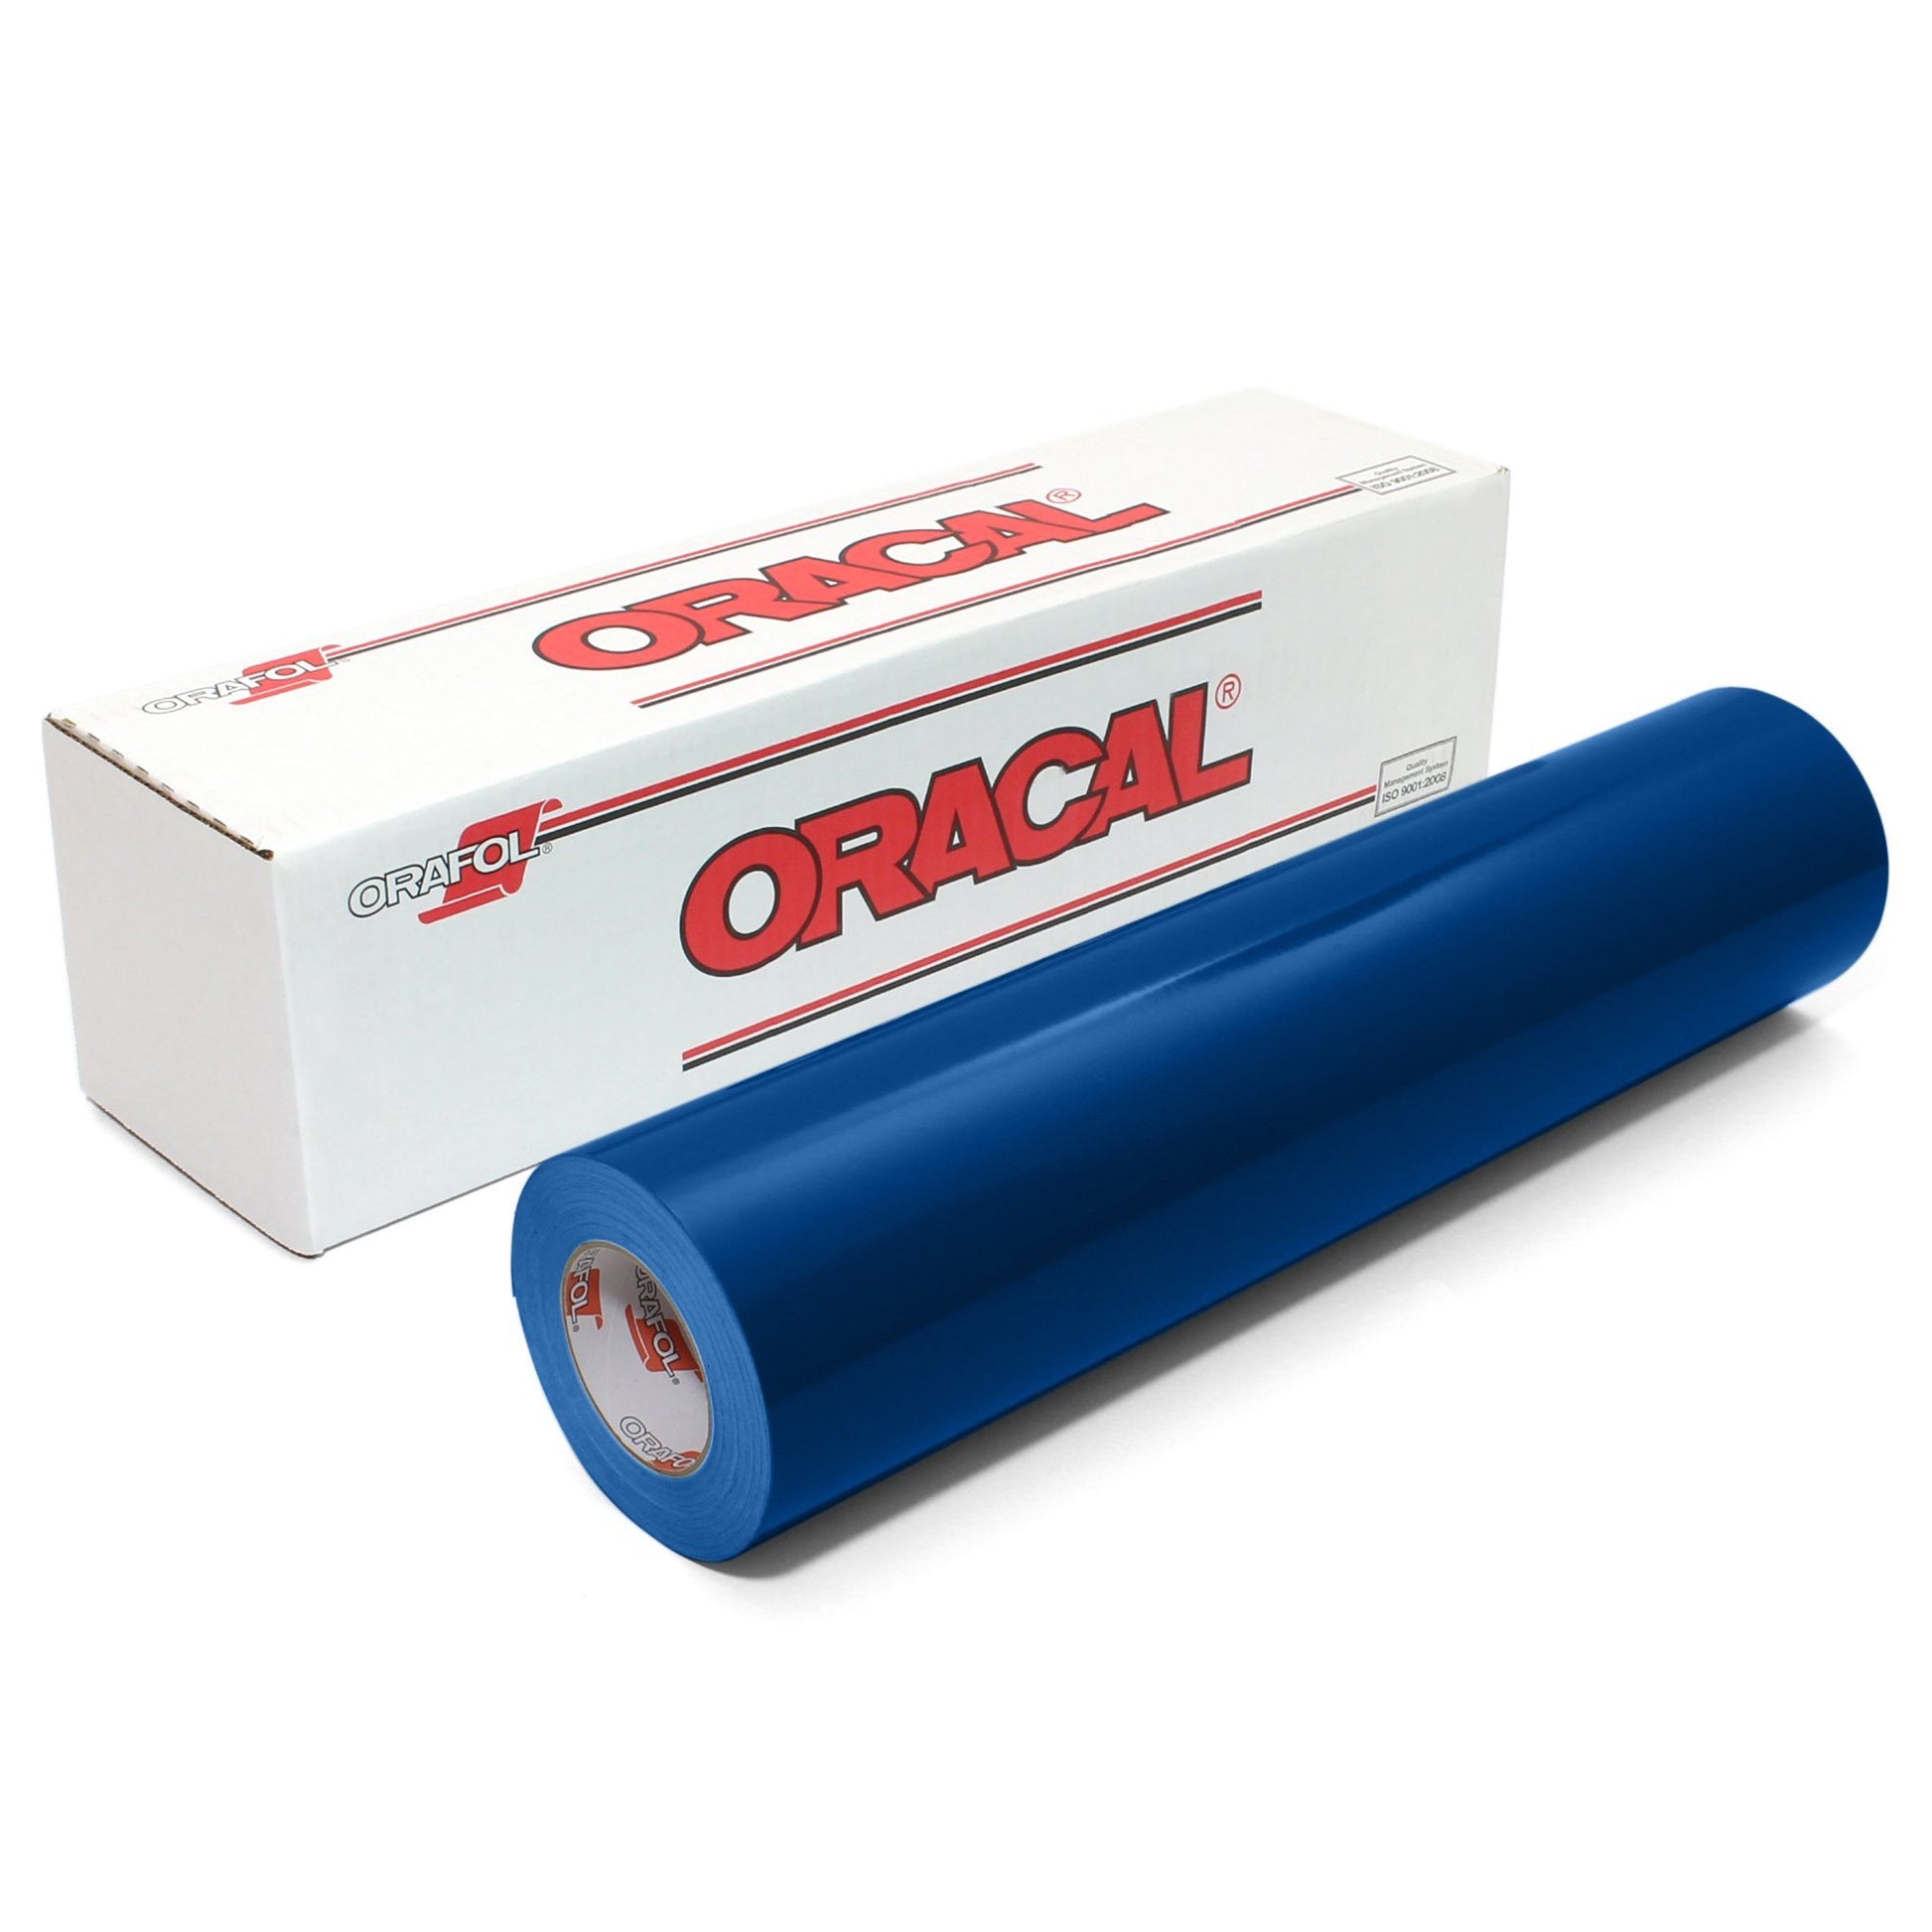 Oracal 651 Permanent Adhesive Vinyl Gloss - Color: Brilliant Blue